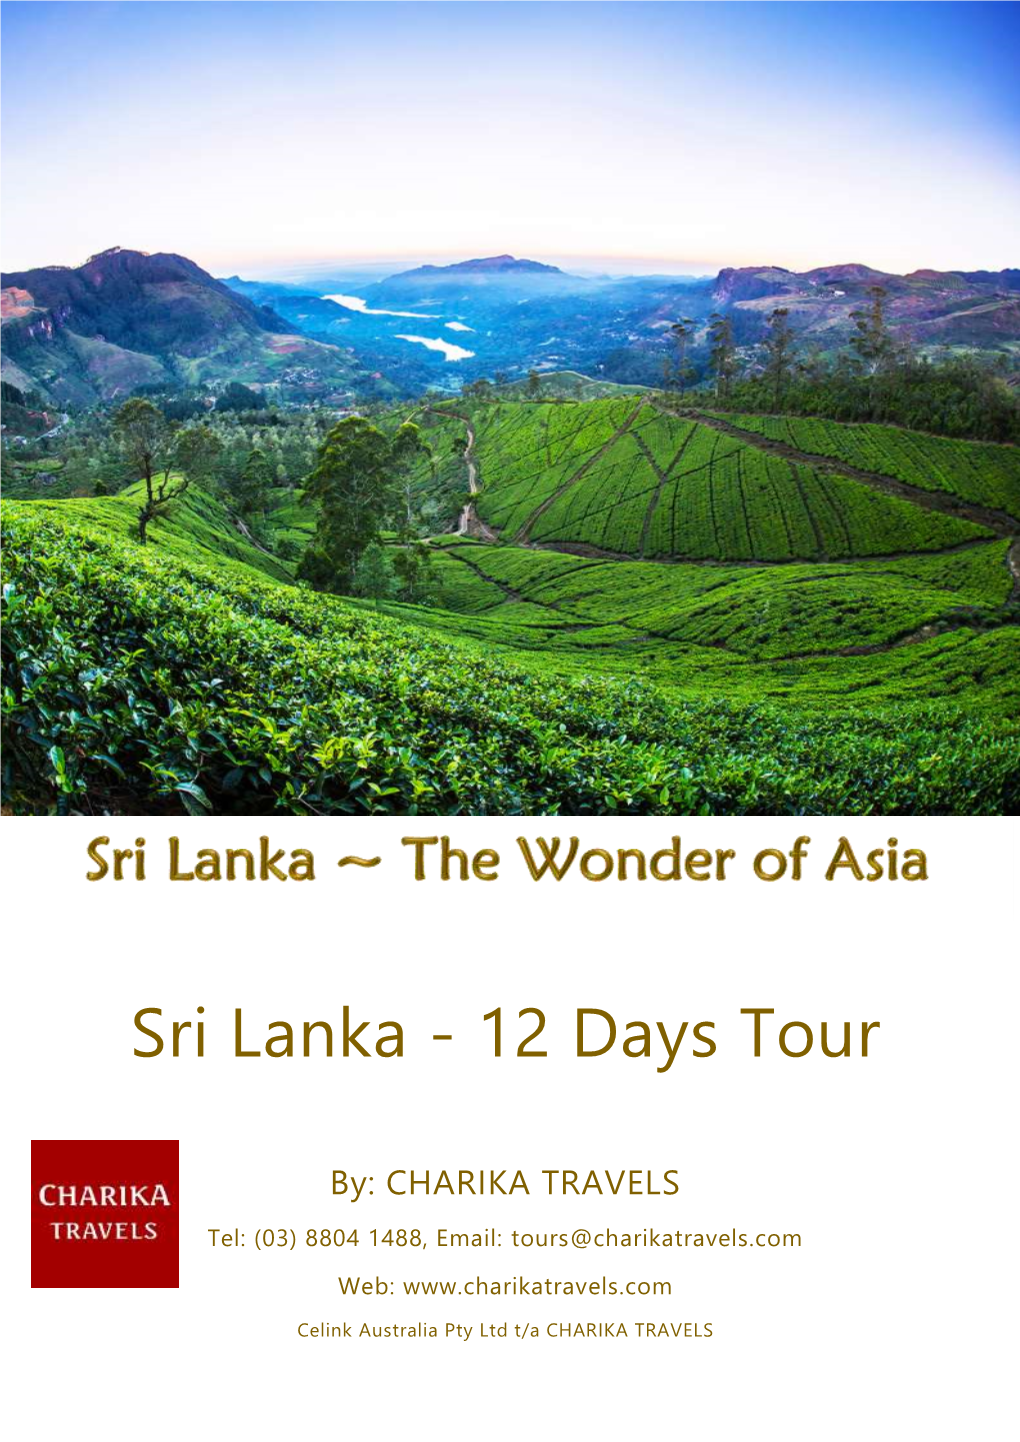 Sri Lanka - 12 Days Tour